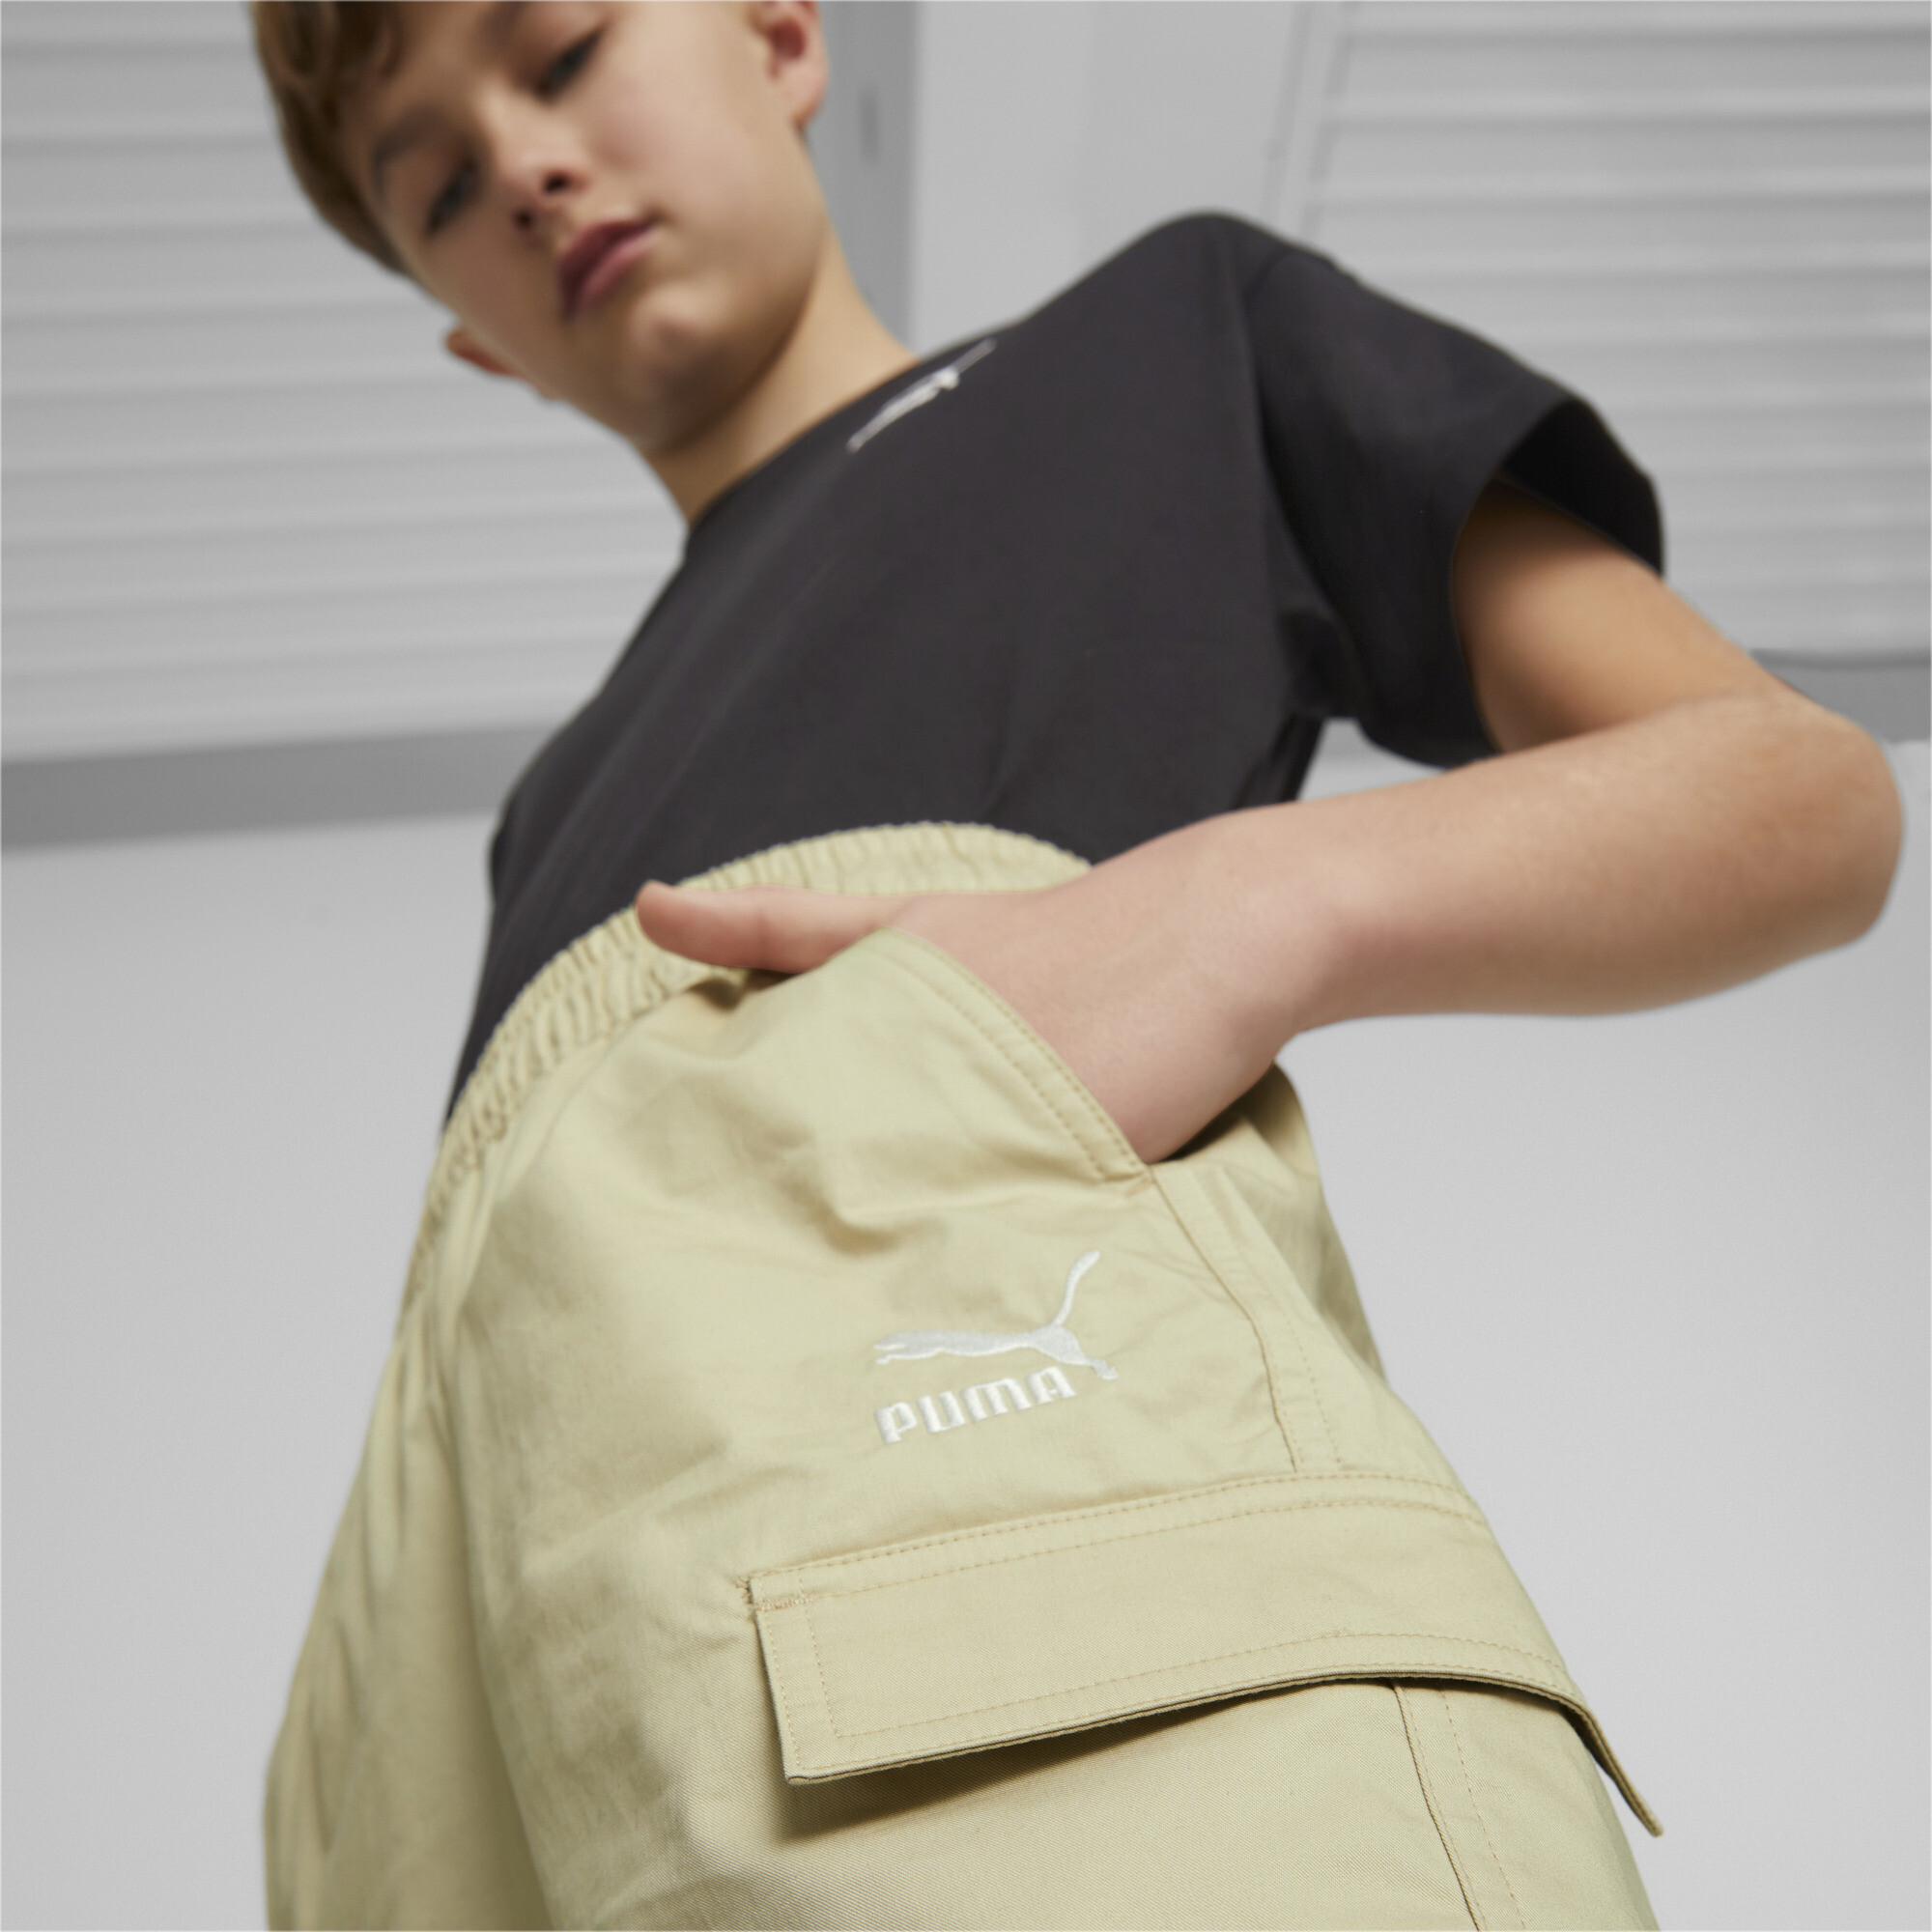 PUMA Classics Woven Sweatpants In Beige, Size 11-12 Youth